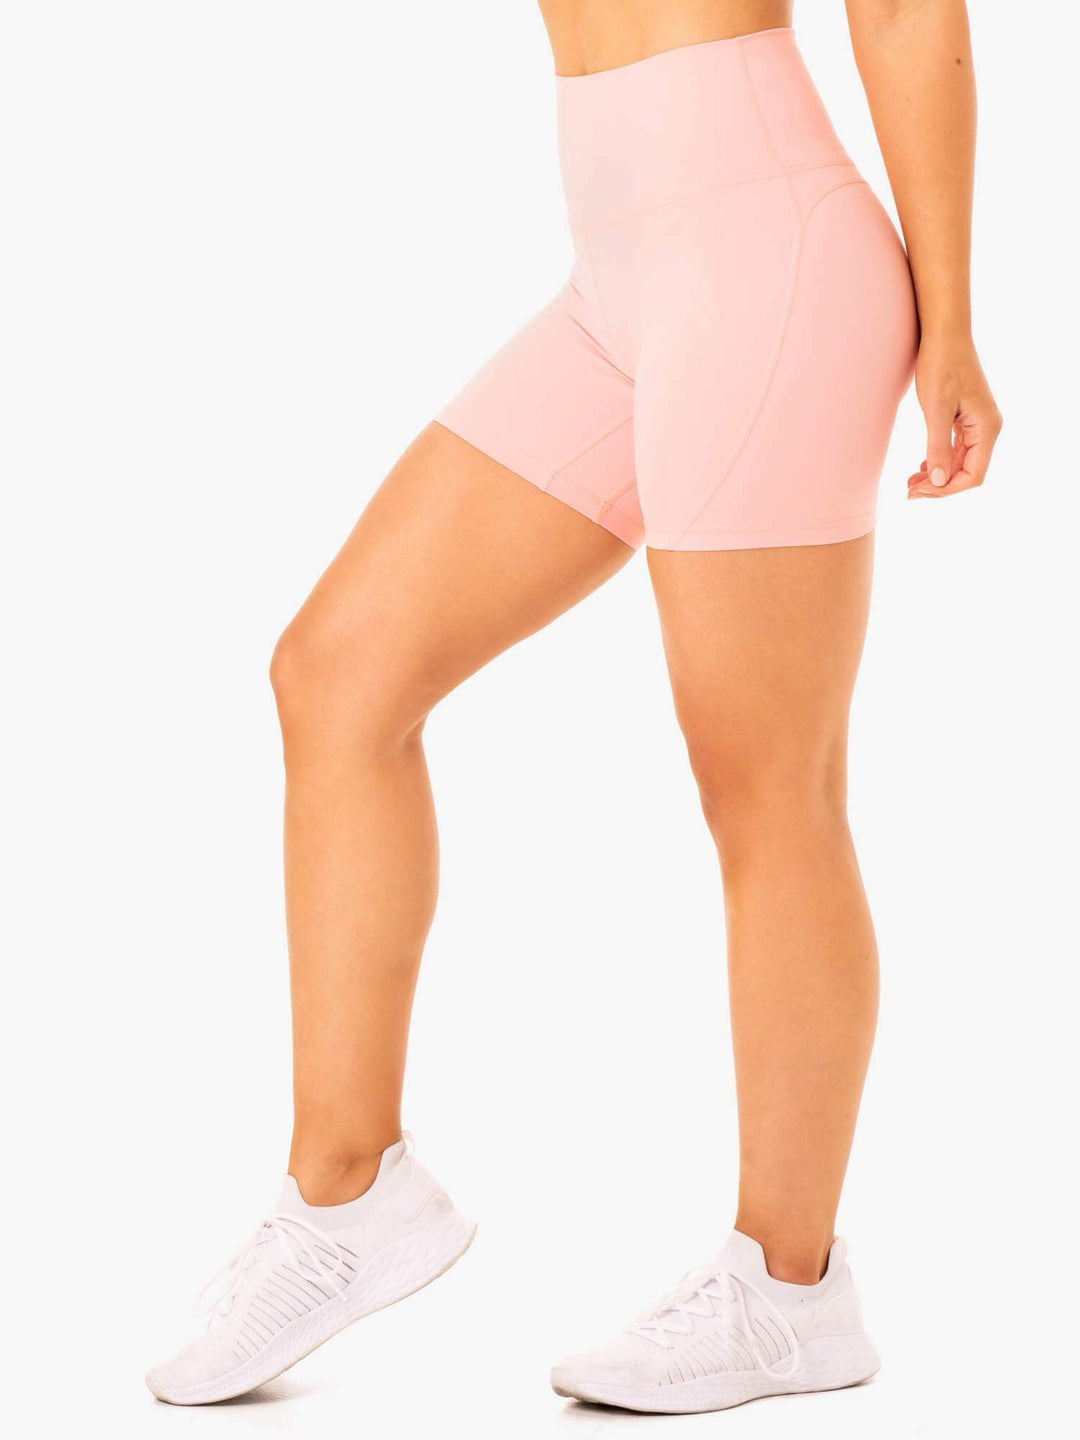 NKD Align Shorts - Pink Clothing Ryderwear 